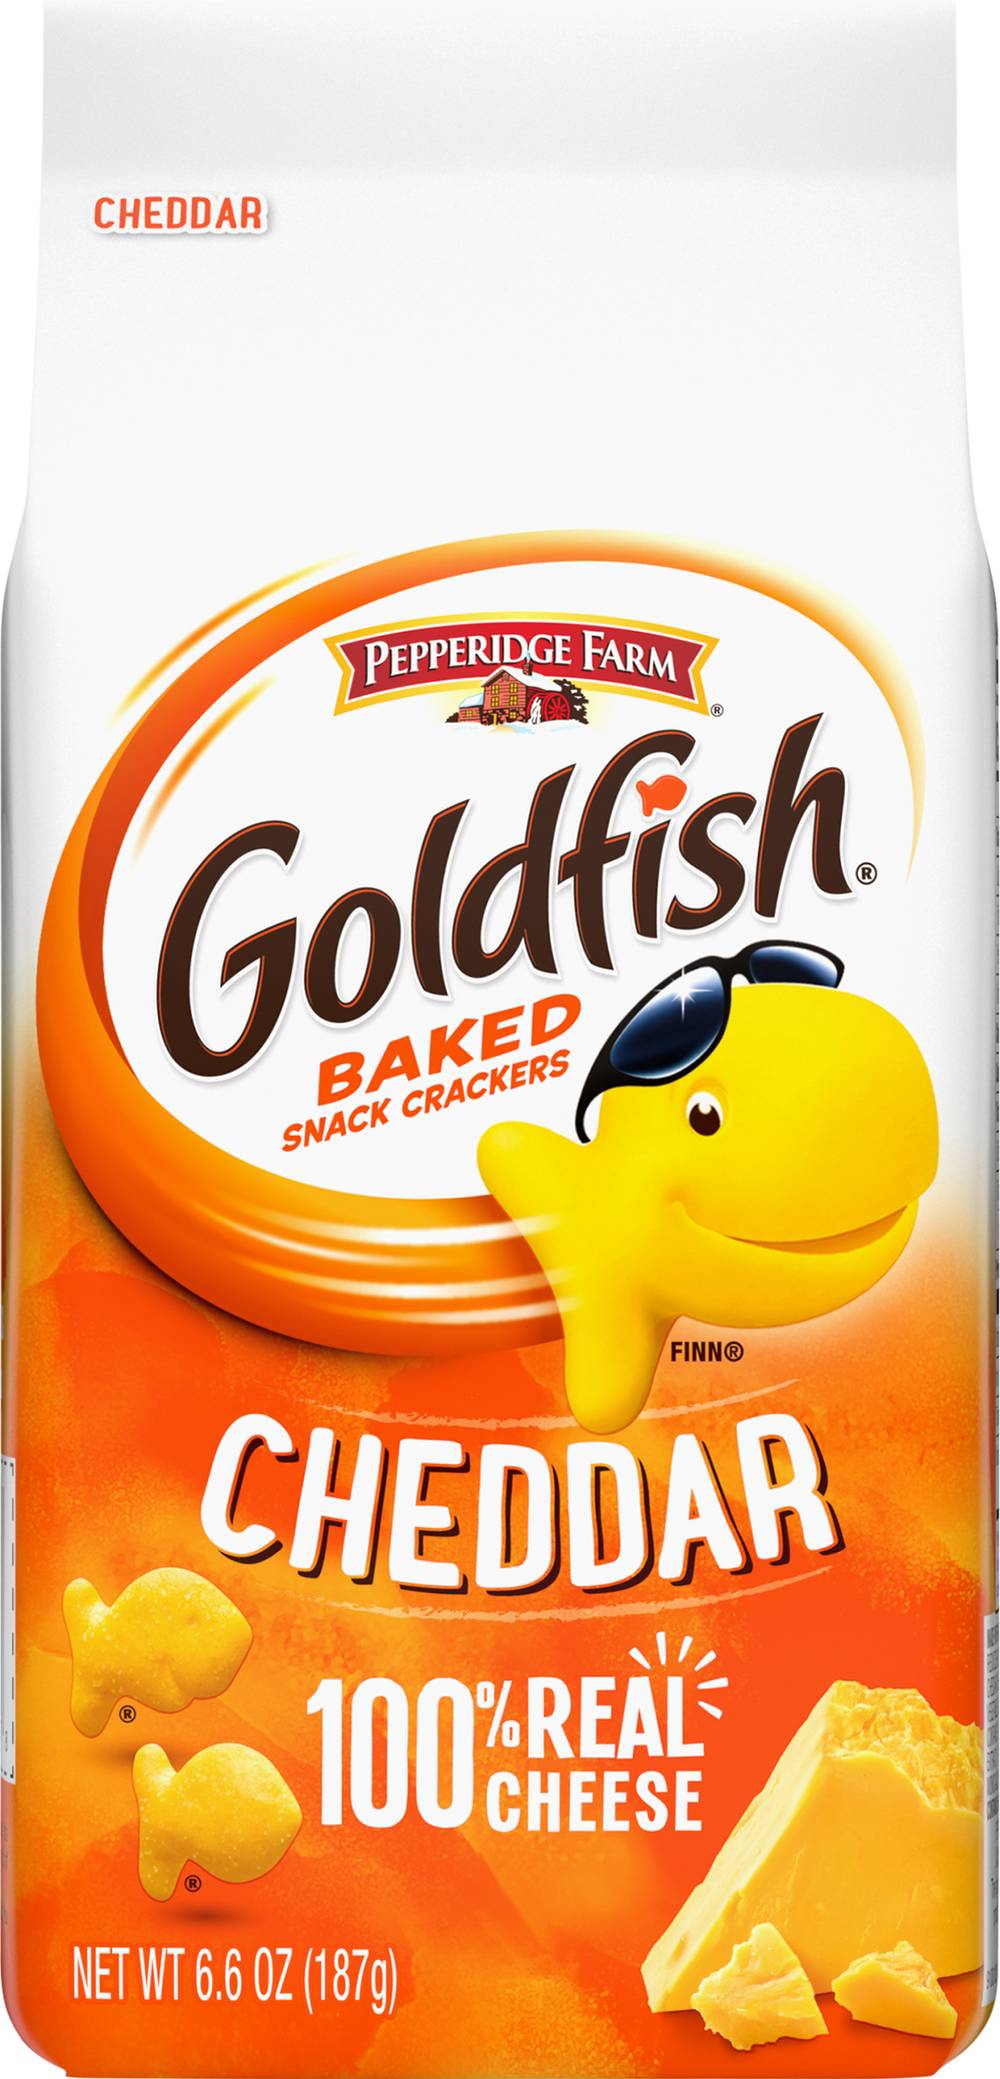 Pepperidge Farm Goldfish Baked Snack Crackers (cheddar)